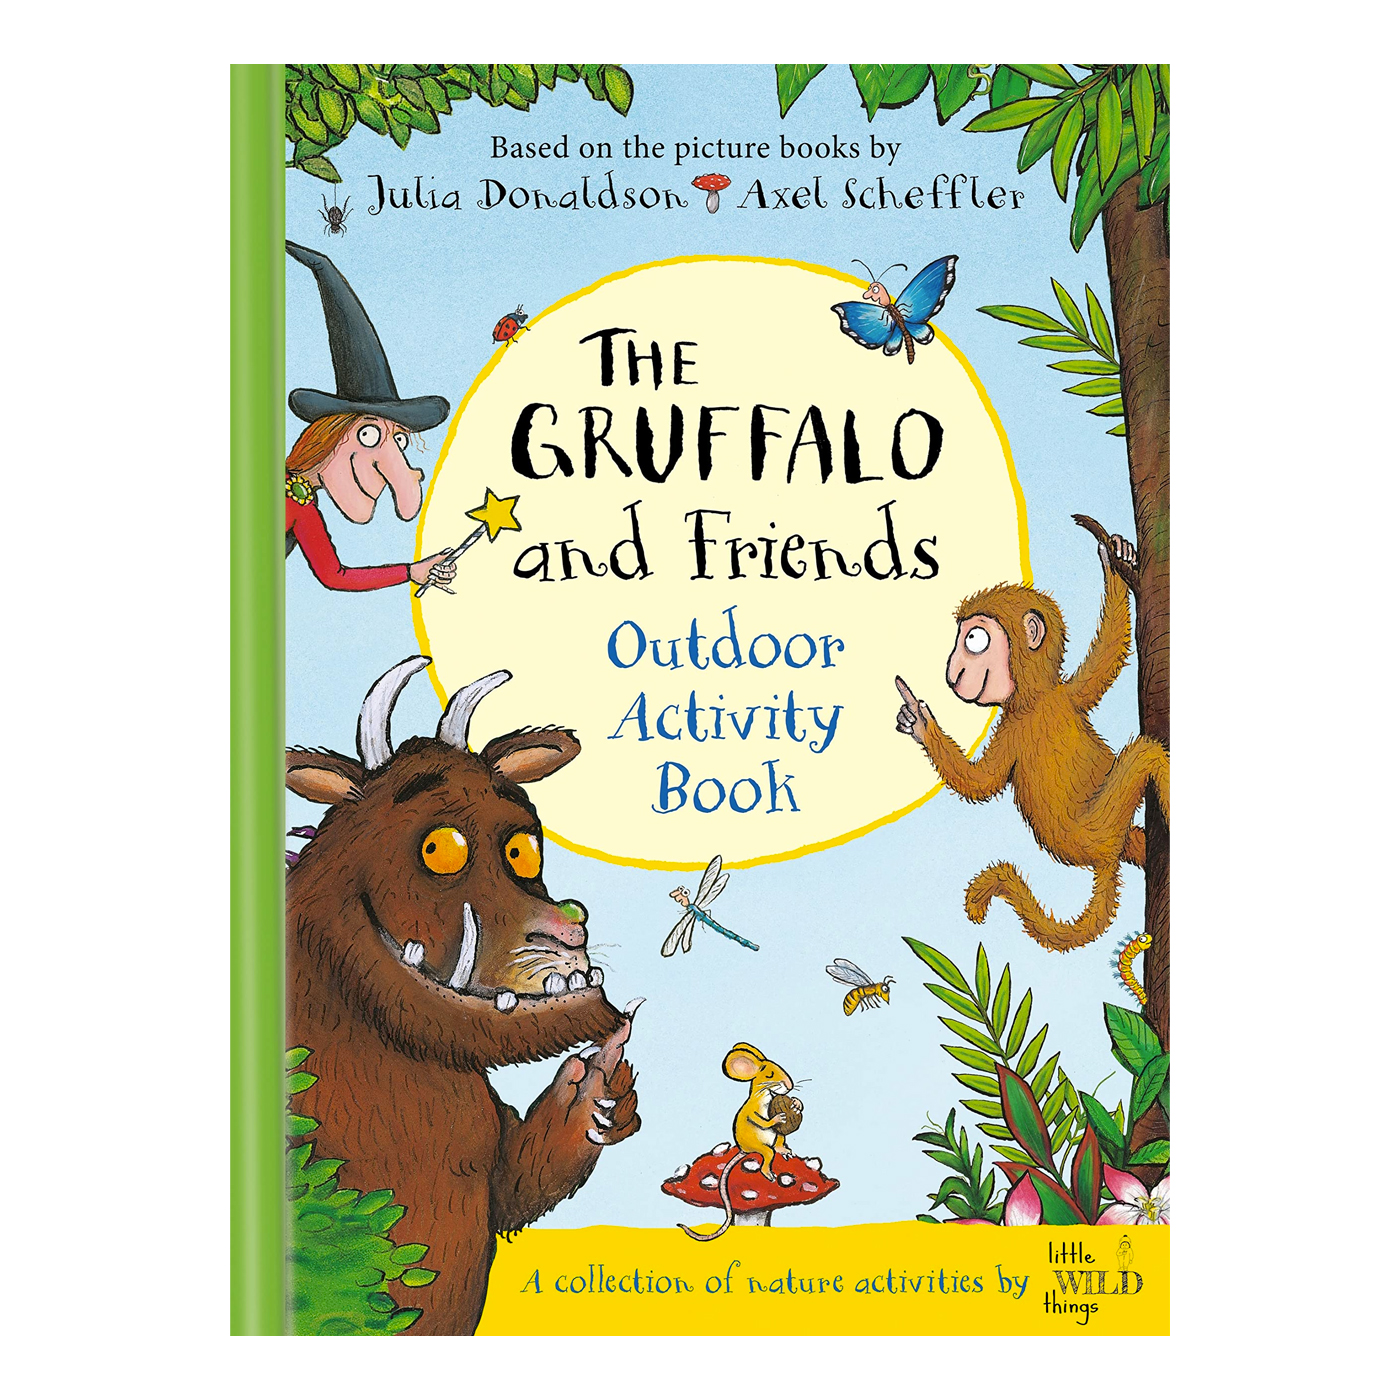 PAN MACMILLAN The Gruffalo and Friends Outdoor Activity Book